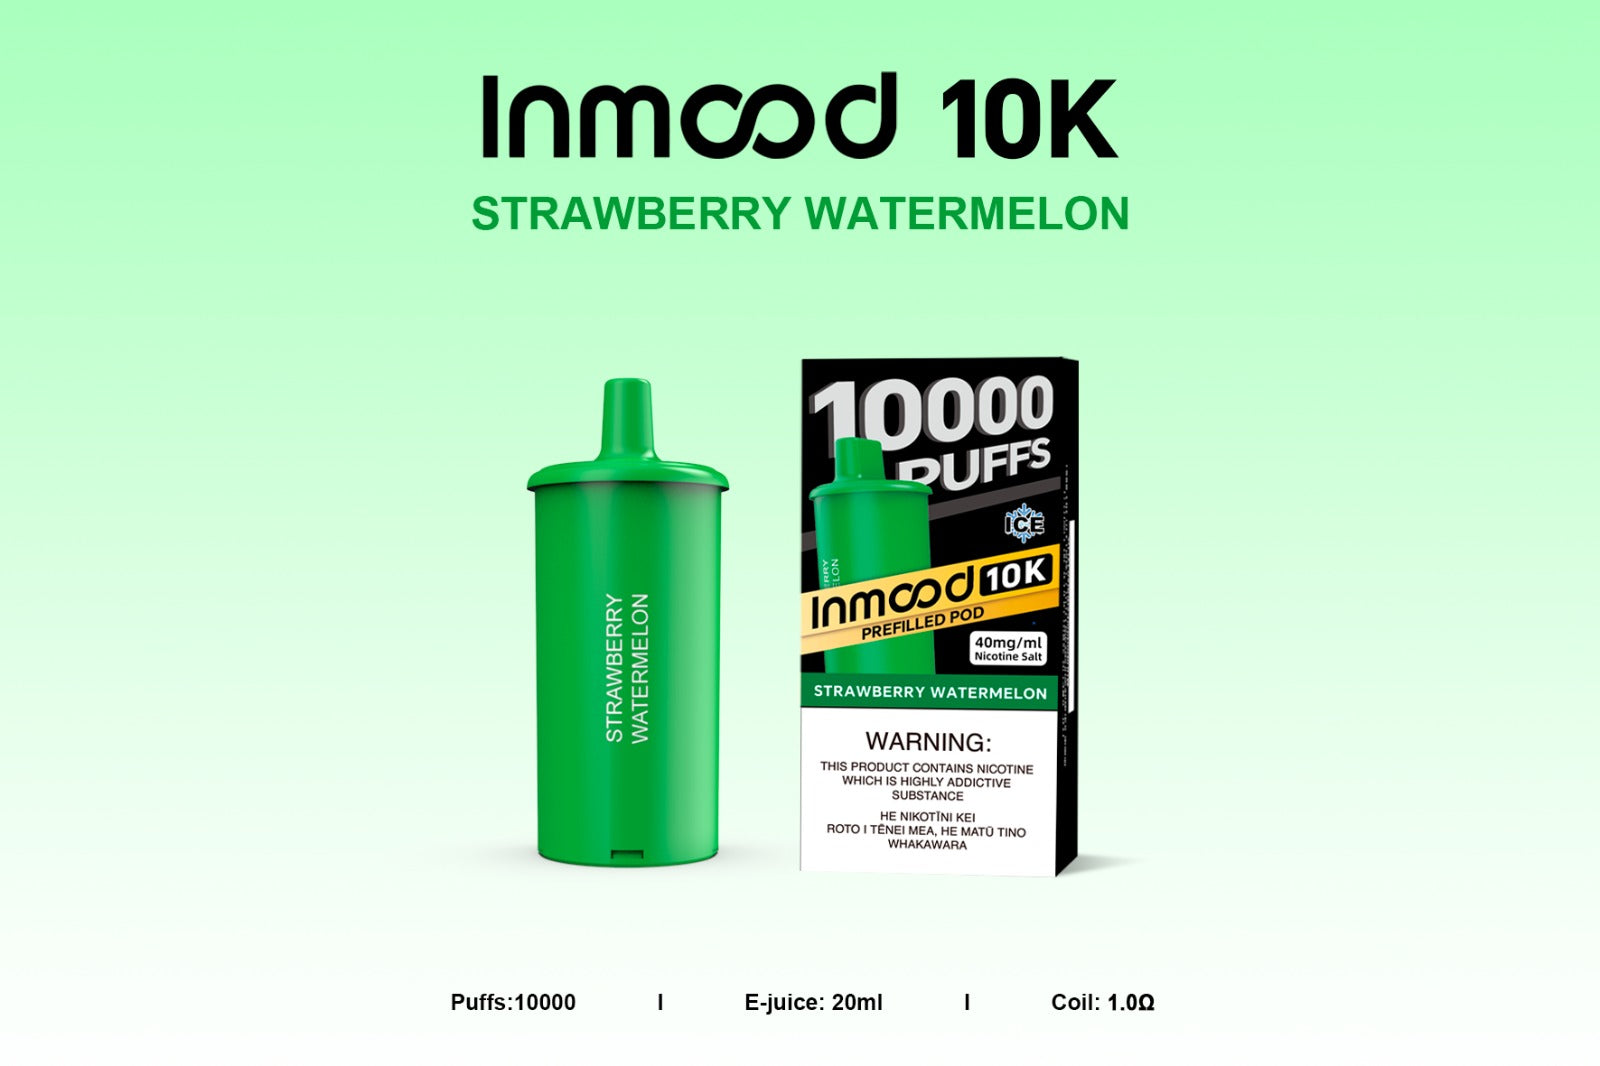 Inmood 10k Strawberry Watermelon 40mg Nic Salt Pod